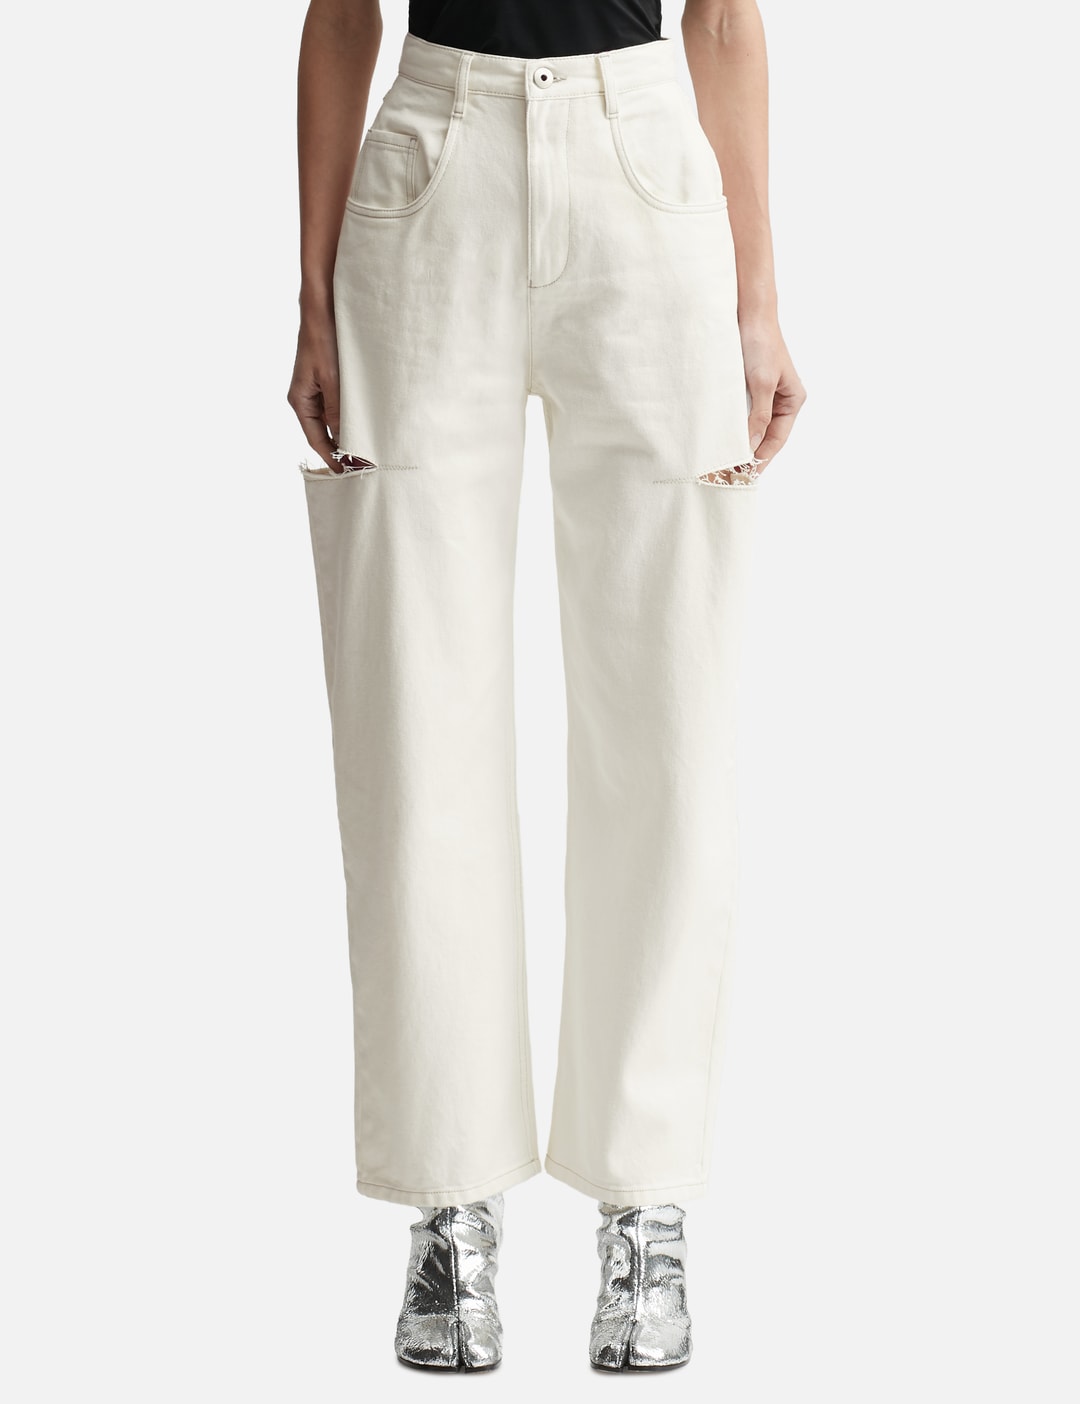 White Jeans, Womens White Denim Jeans Online NZ, Buy White Denim Jean New  Zealand